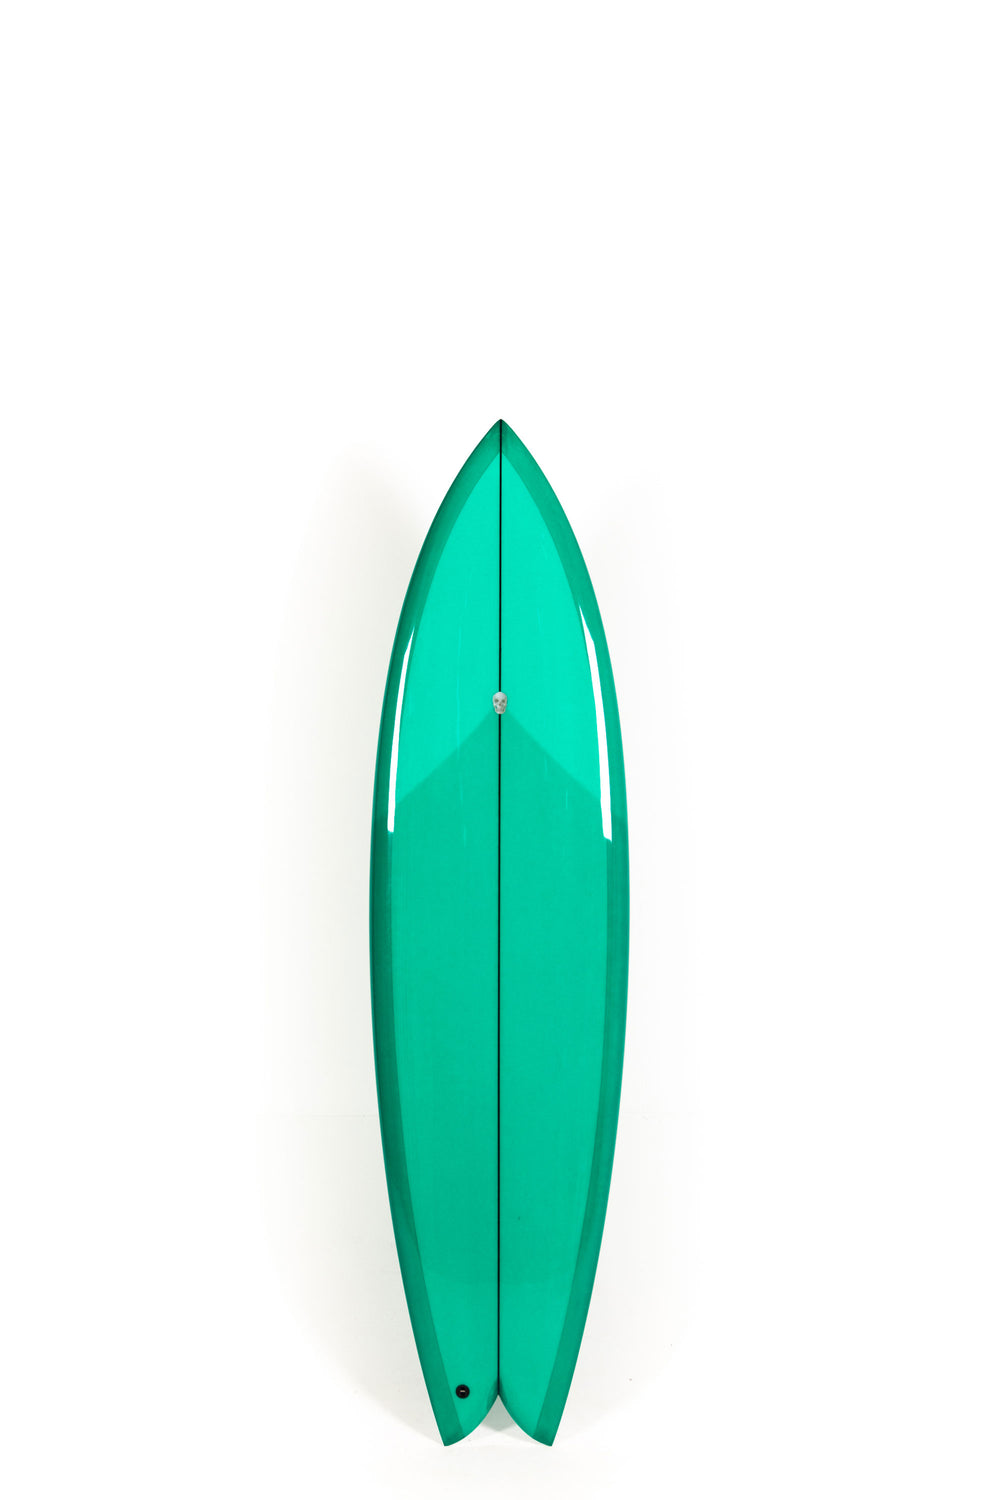 Pukas Surf Shop- Christenson Surfboards - NAUTILUS - 6'8